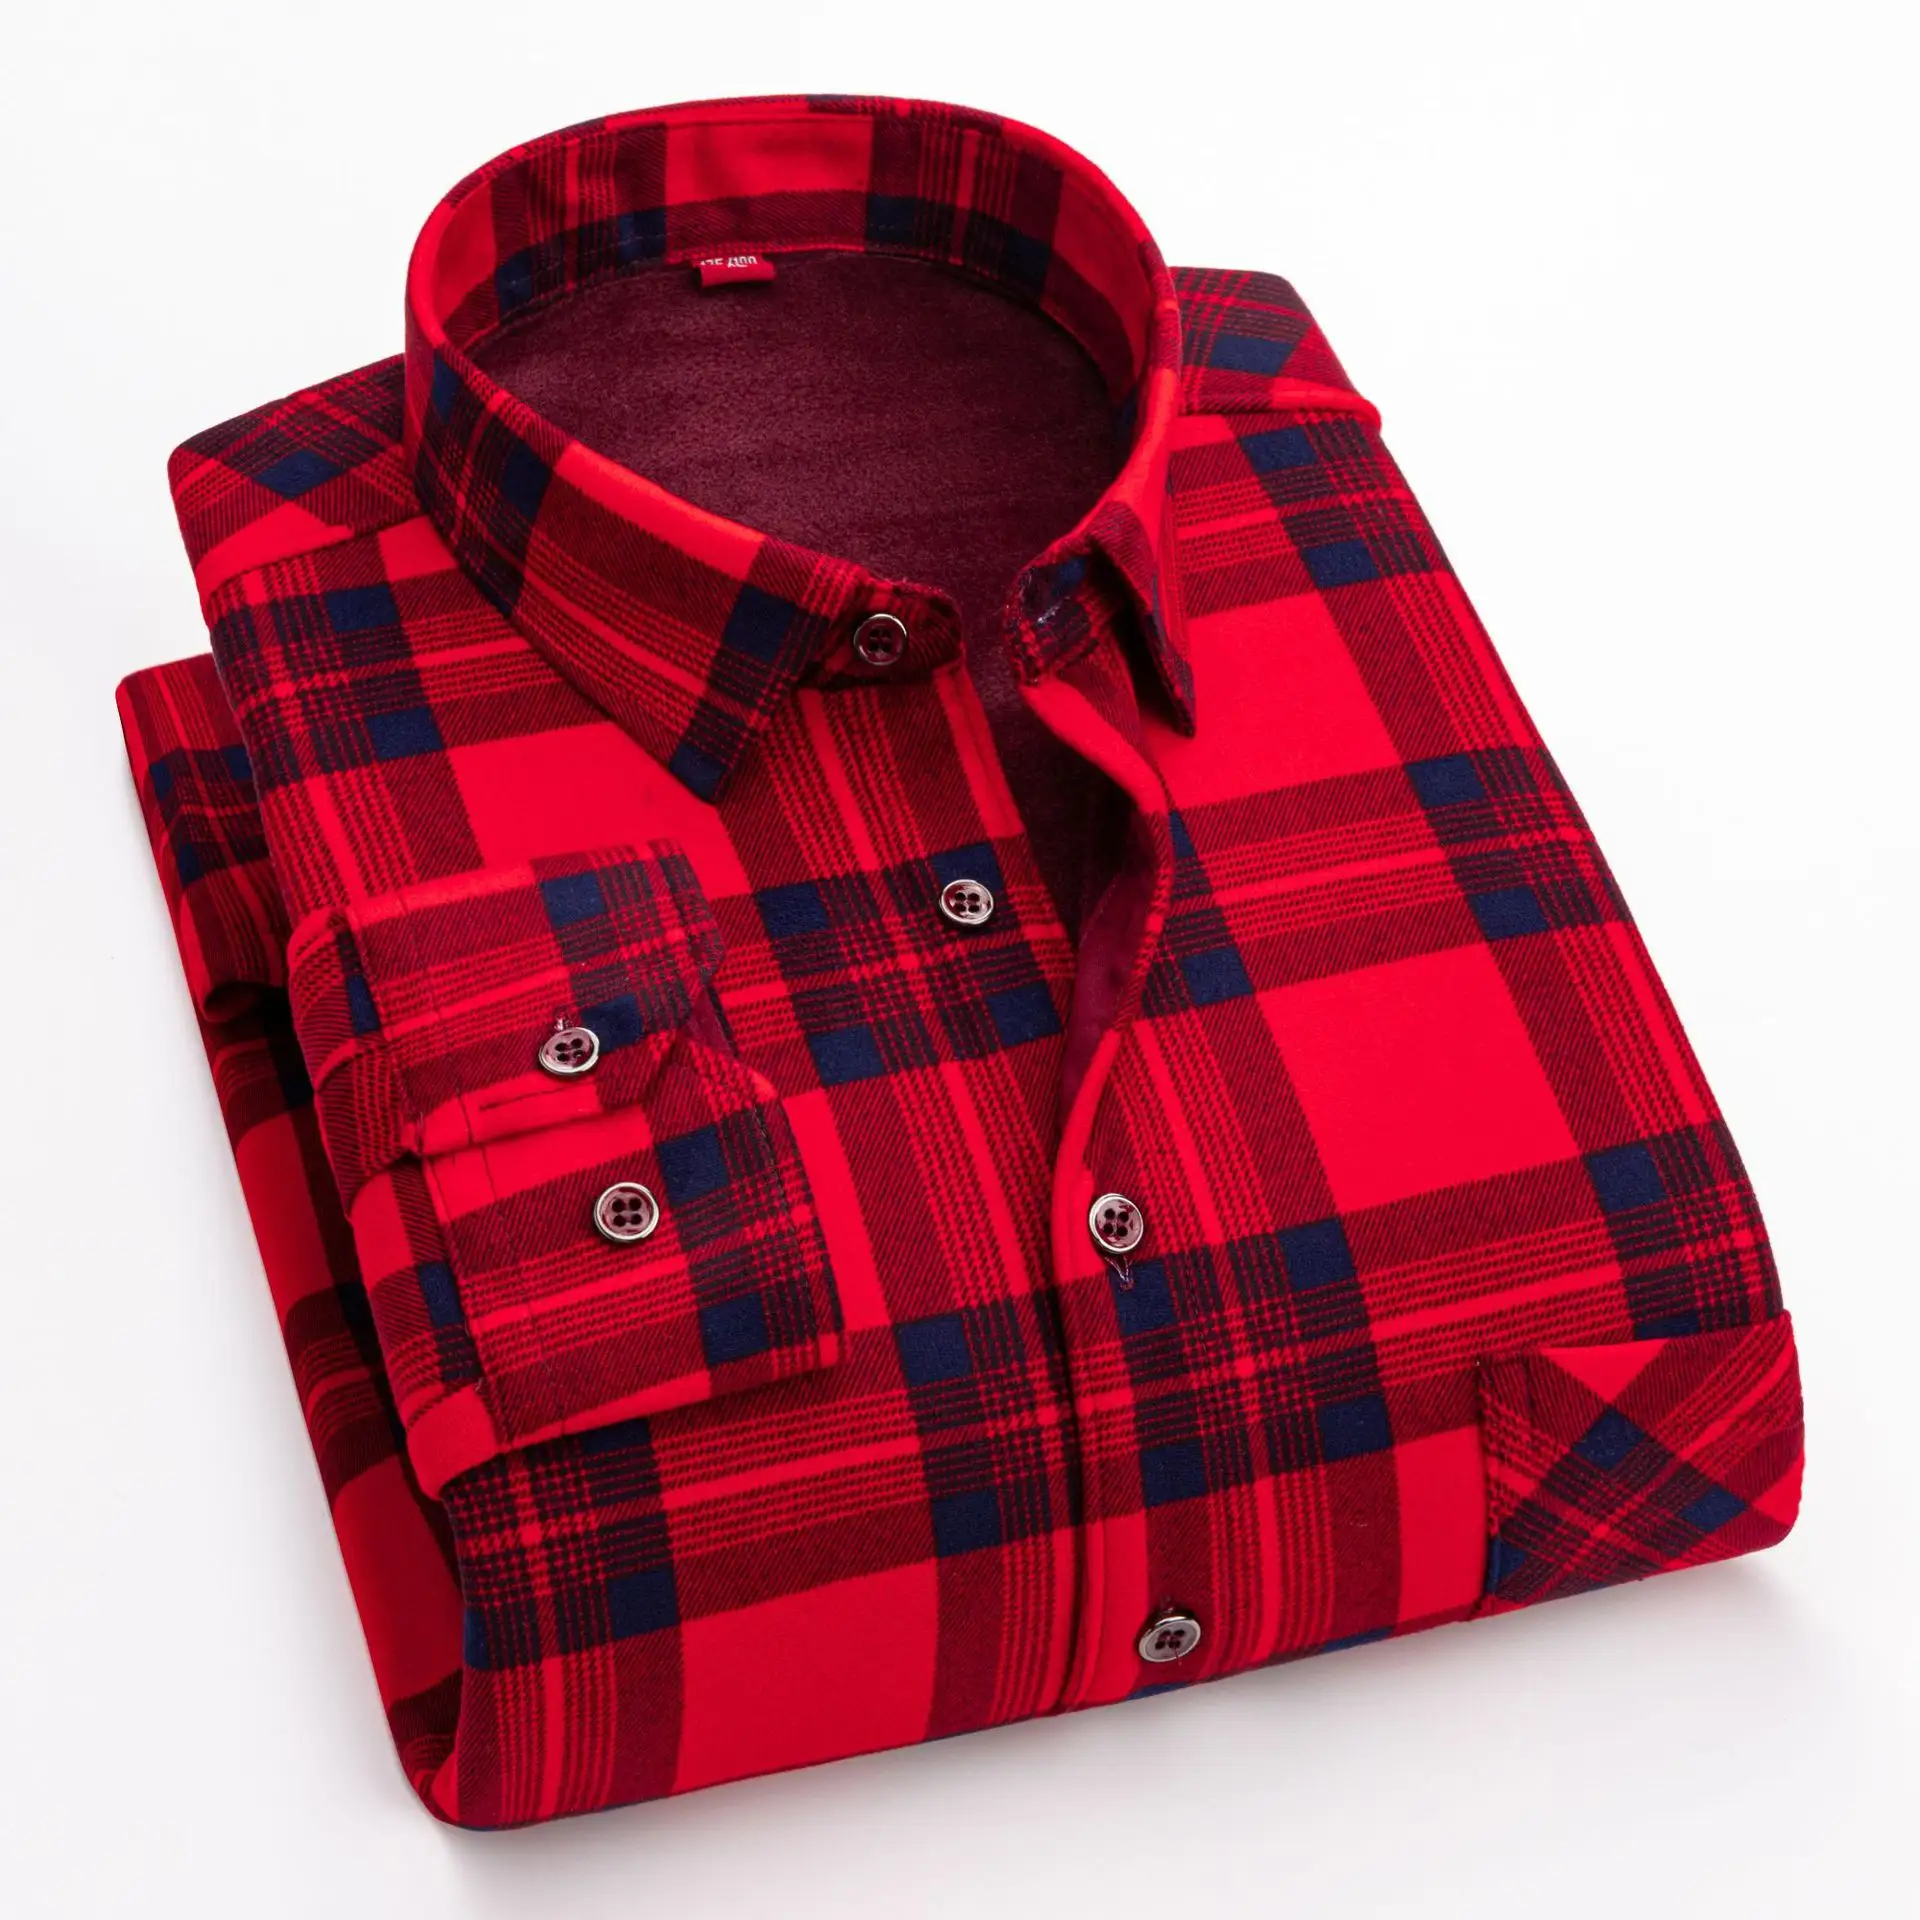 high quality Flannel mens shirts checks plaids stripes Men's 100% Cotton shirts